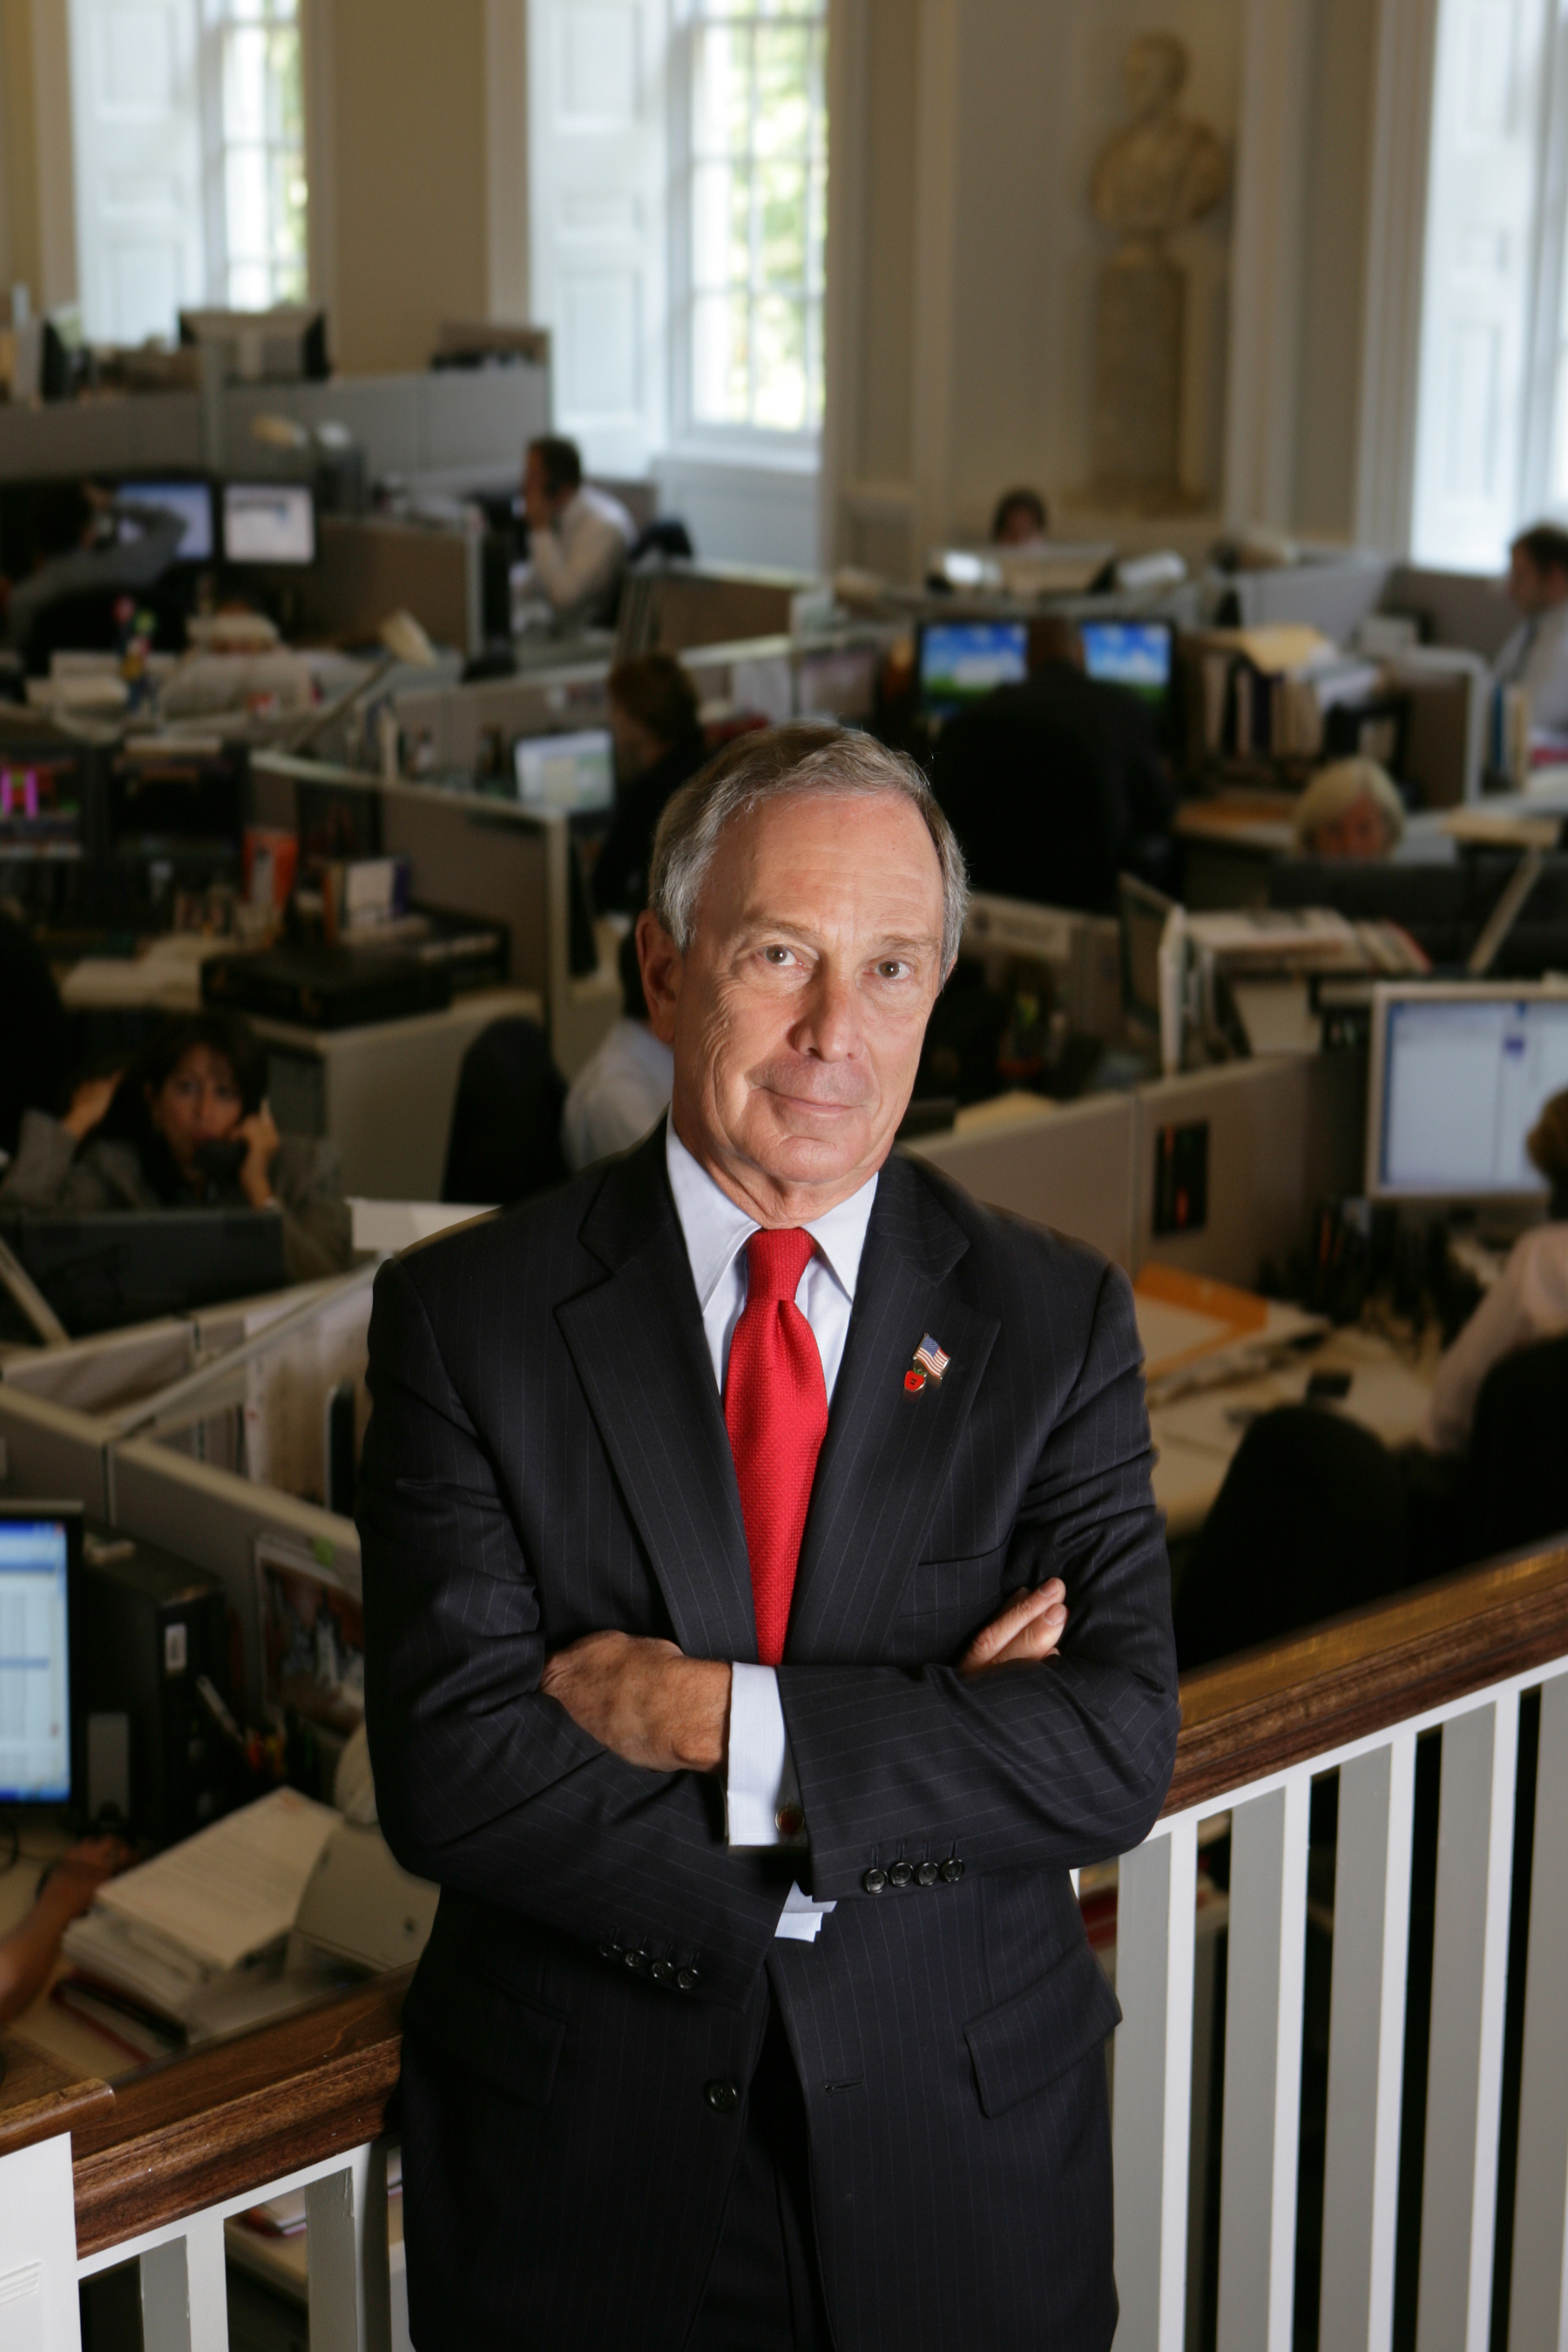 UPDATE 4-Former New York Mayor Bloomberg enters 2020 Democratic presidential race